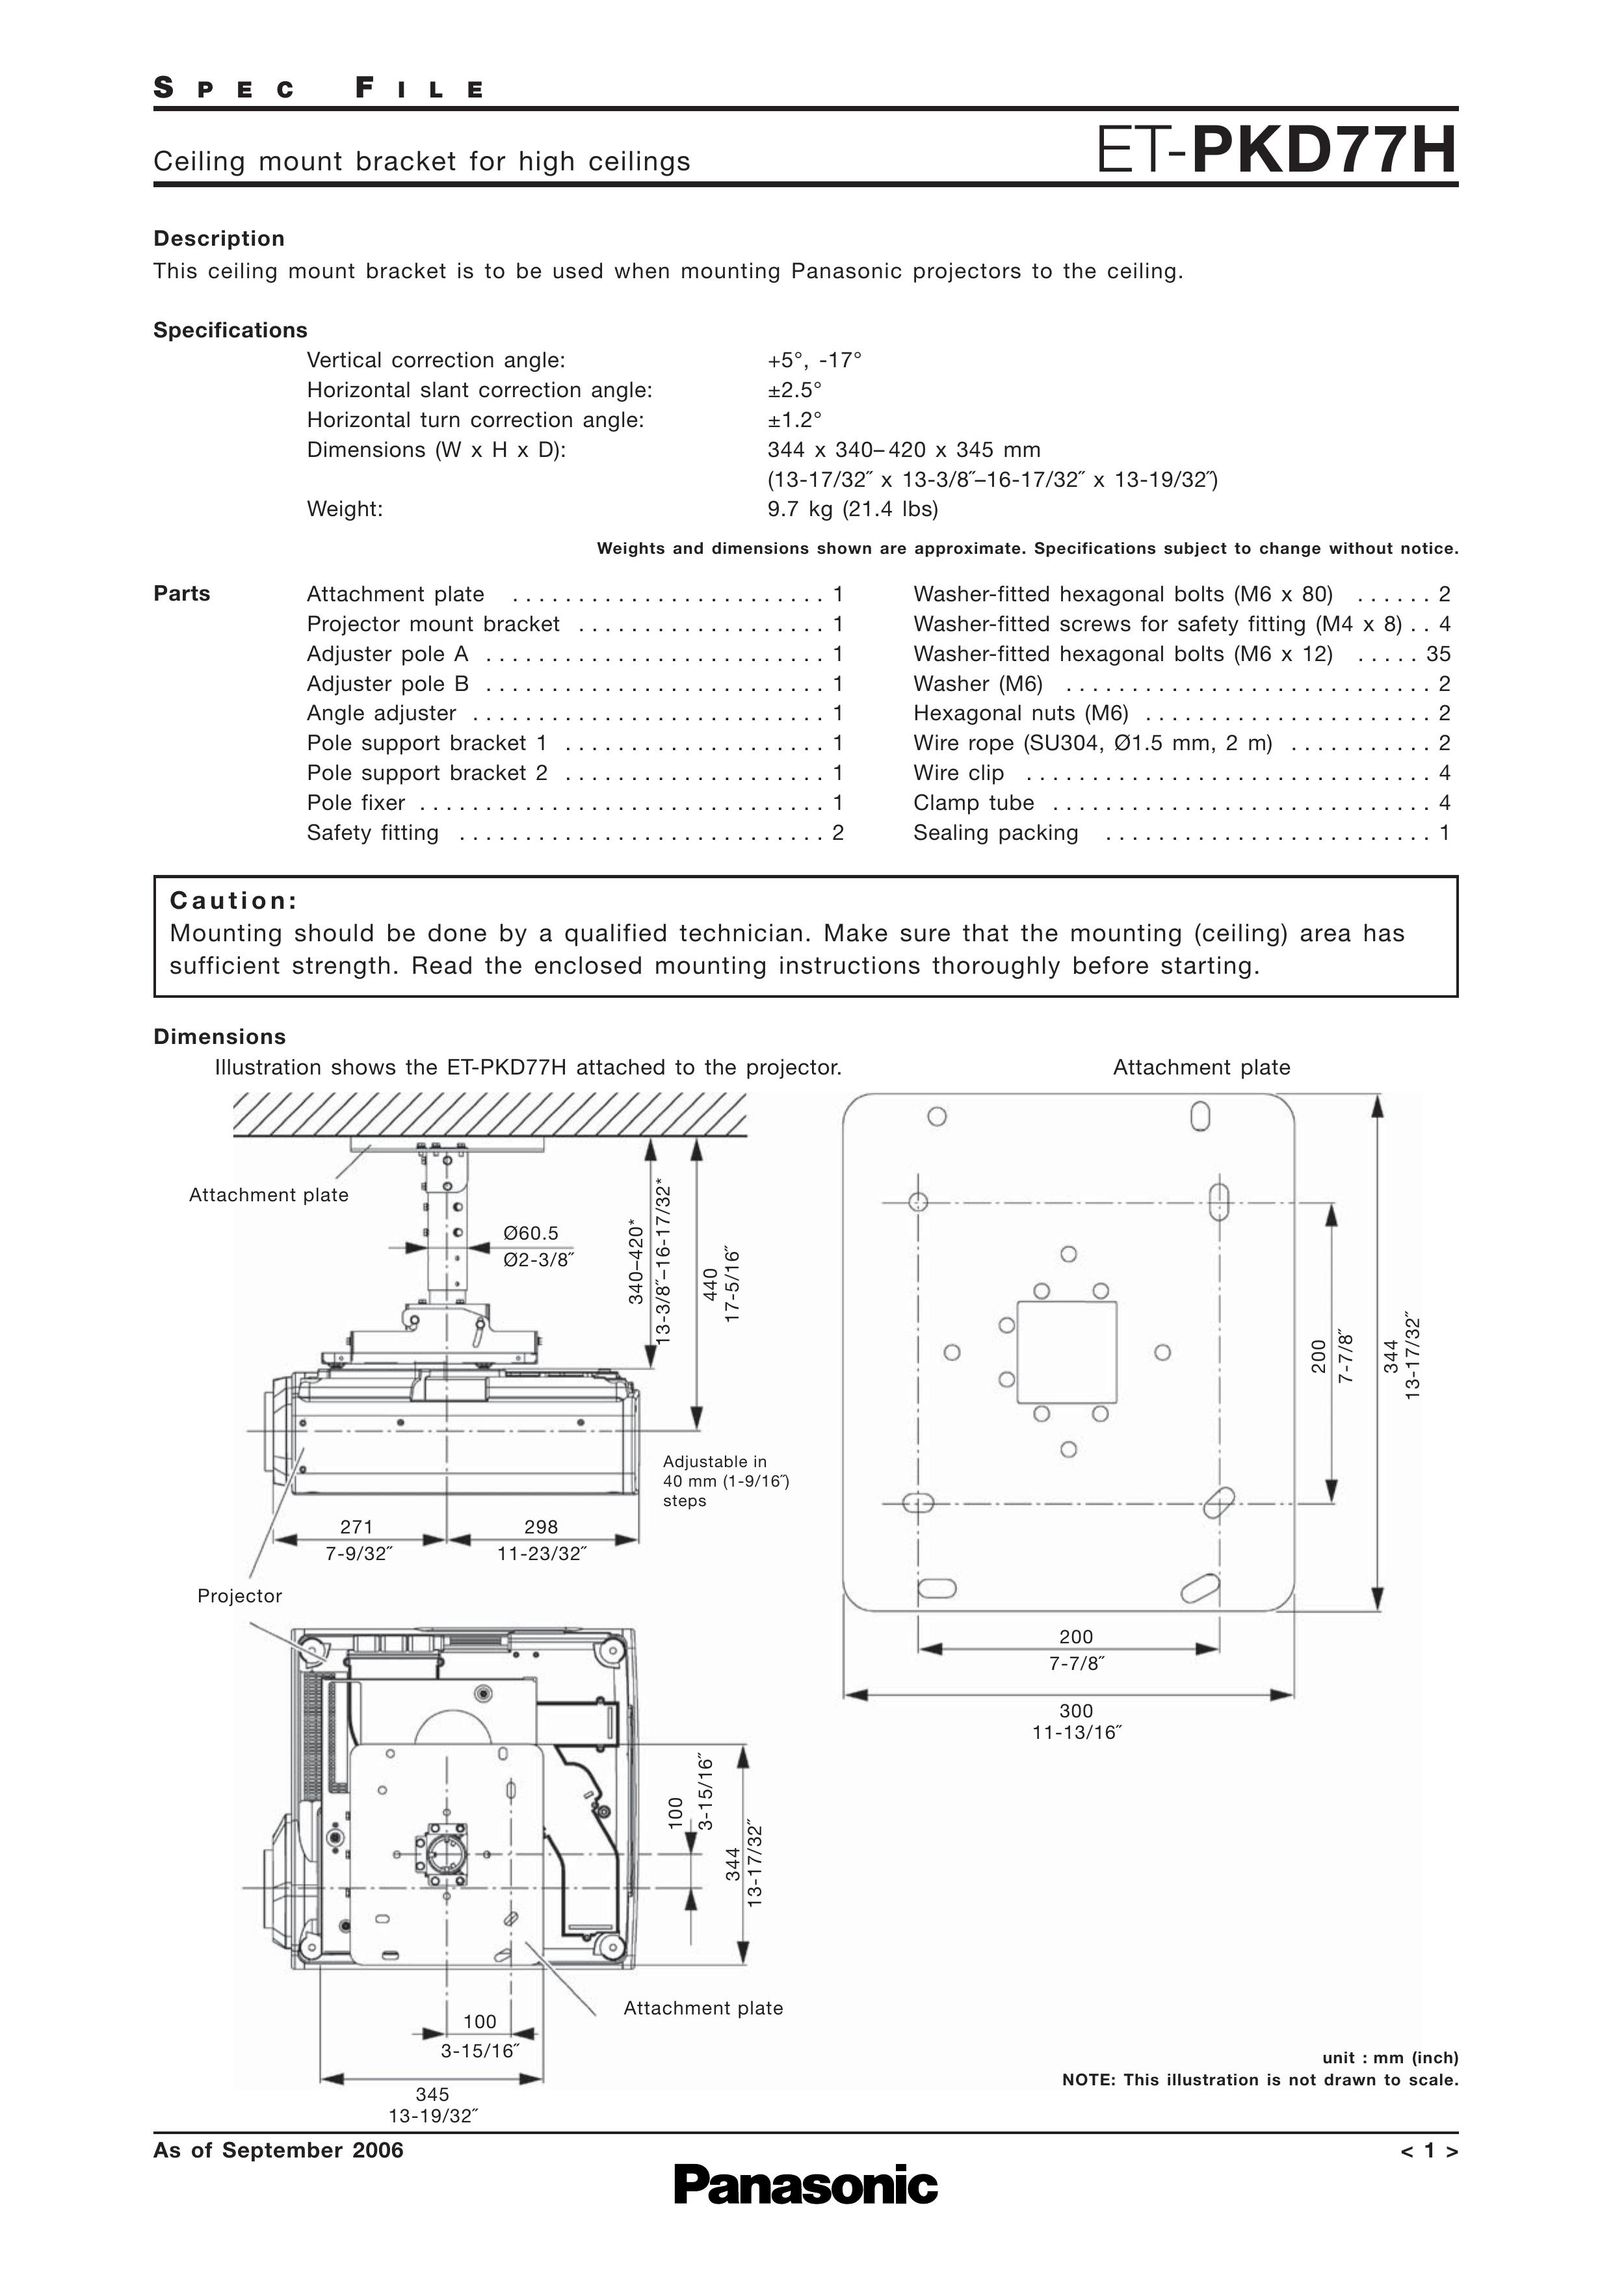 Panasonic ET-PKD77H Projector User Manual